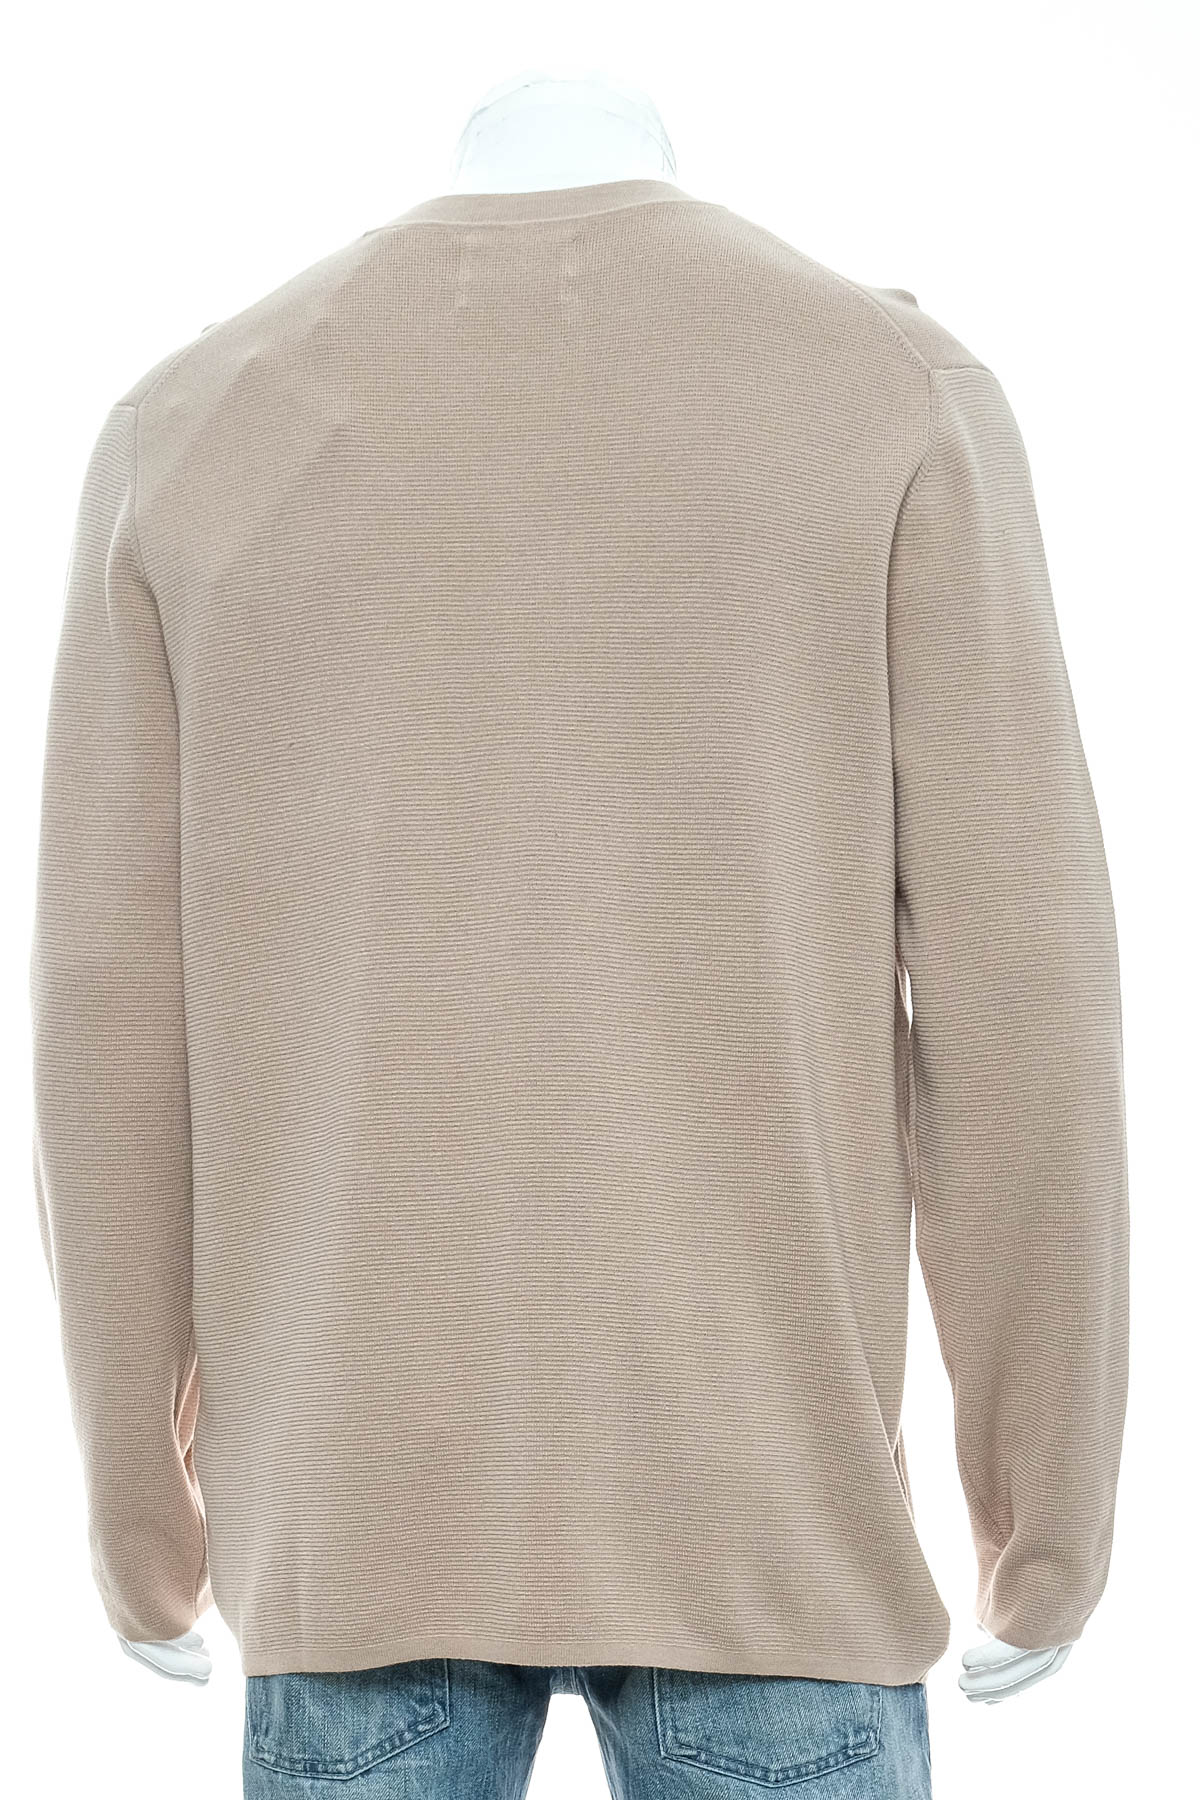 Men's sweater - Marc O' Polo - 1